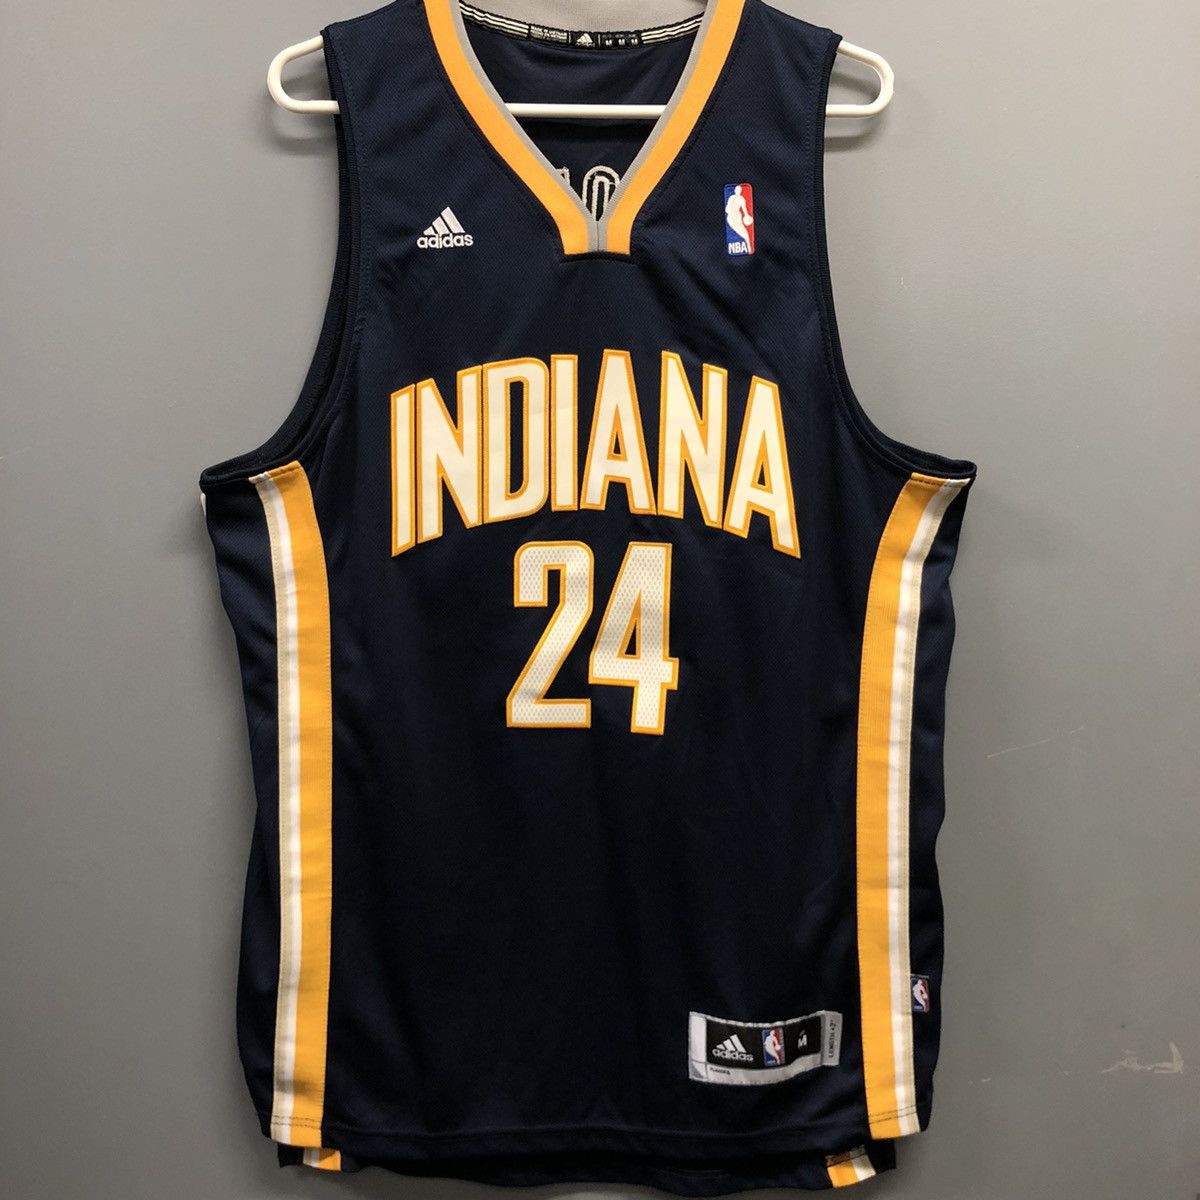 DregsThreads Indiana Pacers Paul George Adidas Kids Jersey | NBA Basketball Sportswear